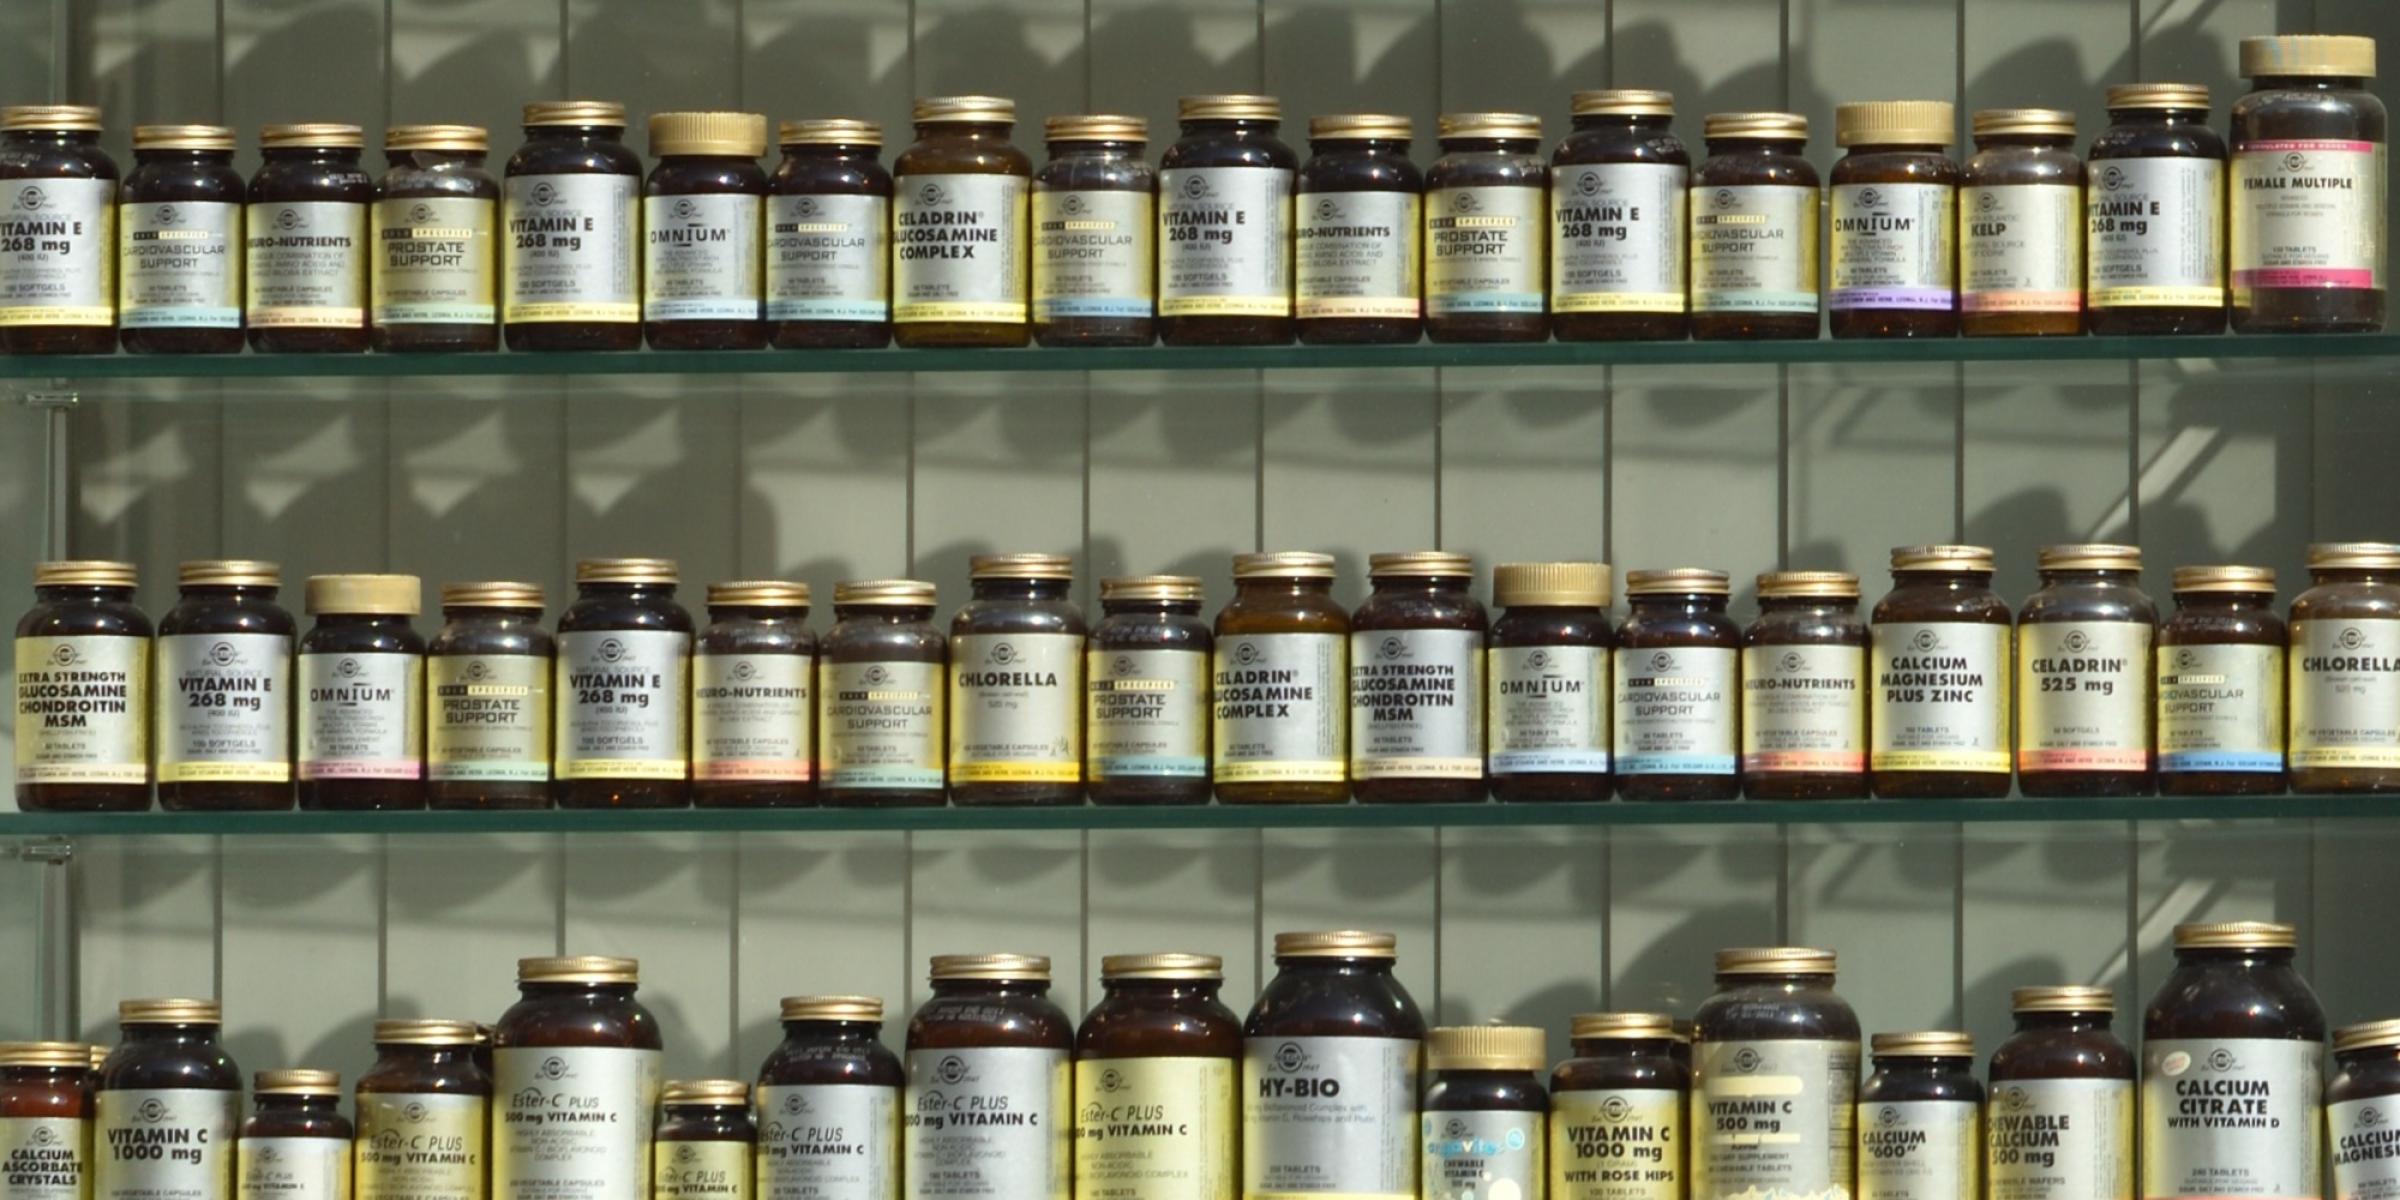 Shelves of supplements